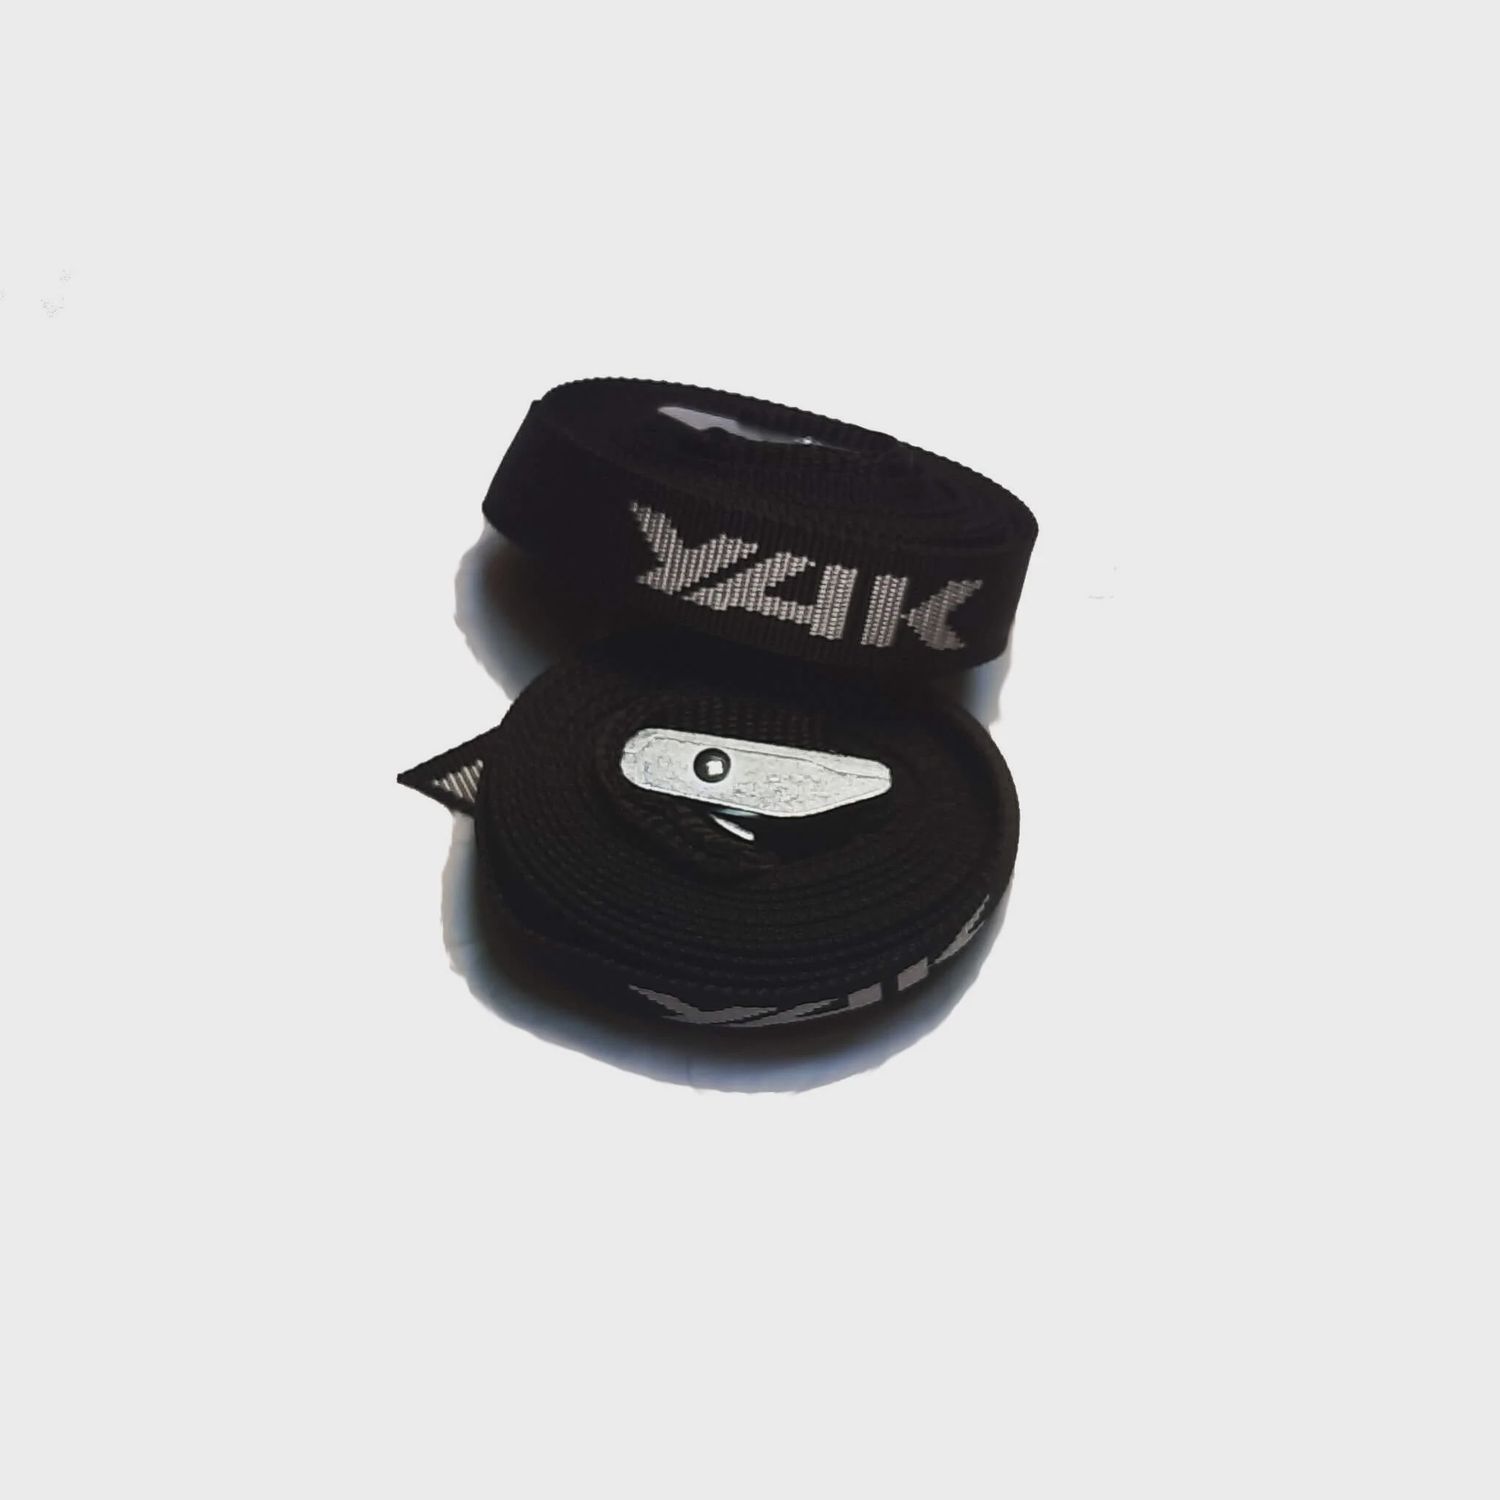 YAK rack strap, Colour: Black, Size: 3 meters